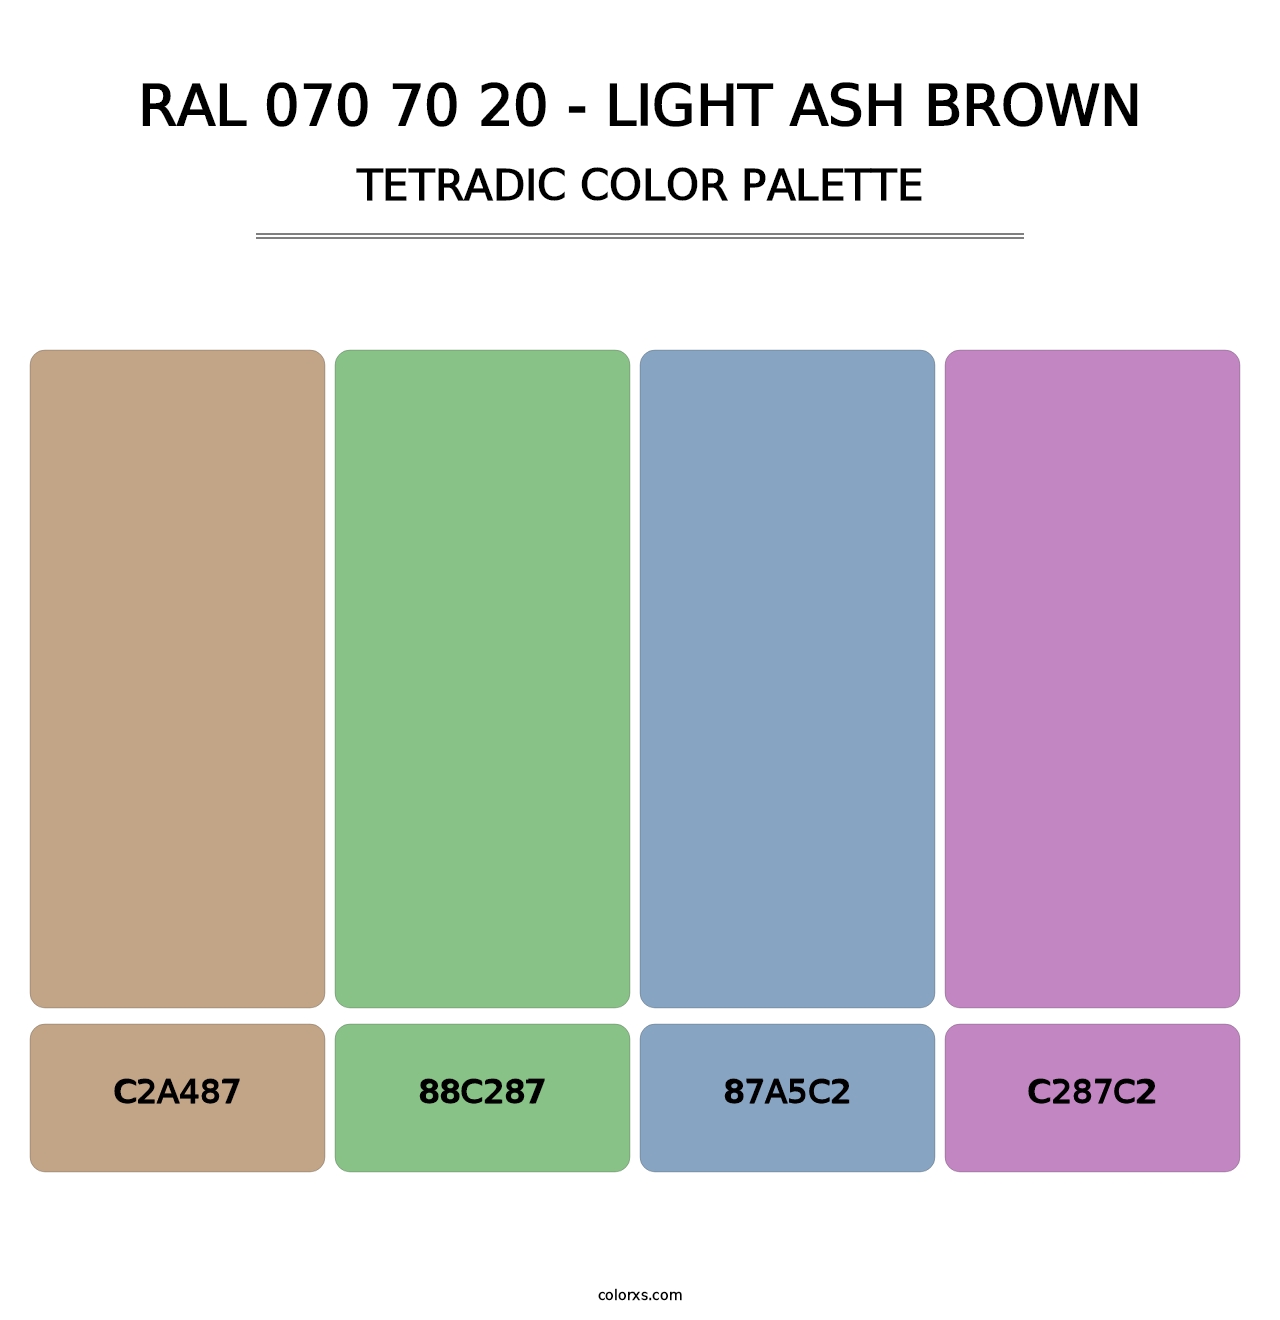 RAL 070 70 20 - Light Ash Brown - Tetradic Color Palette